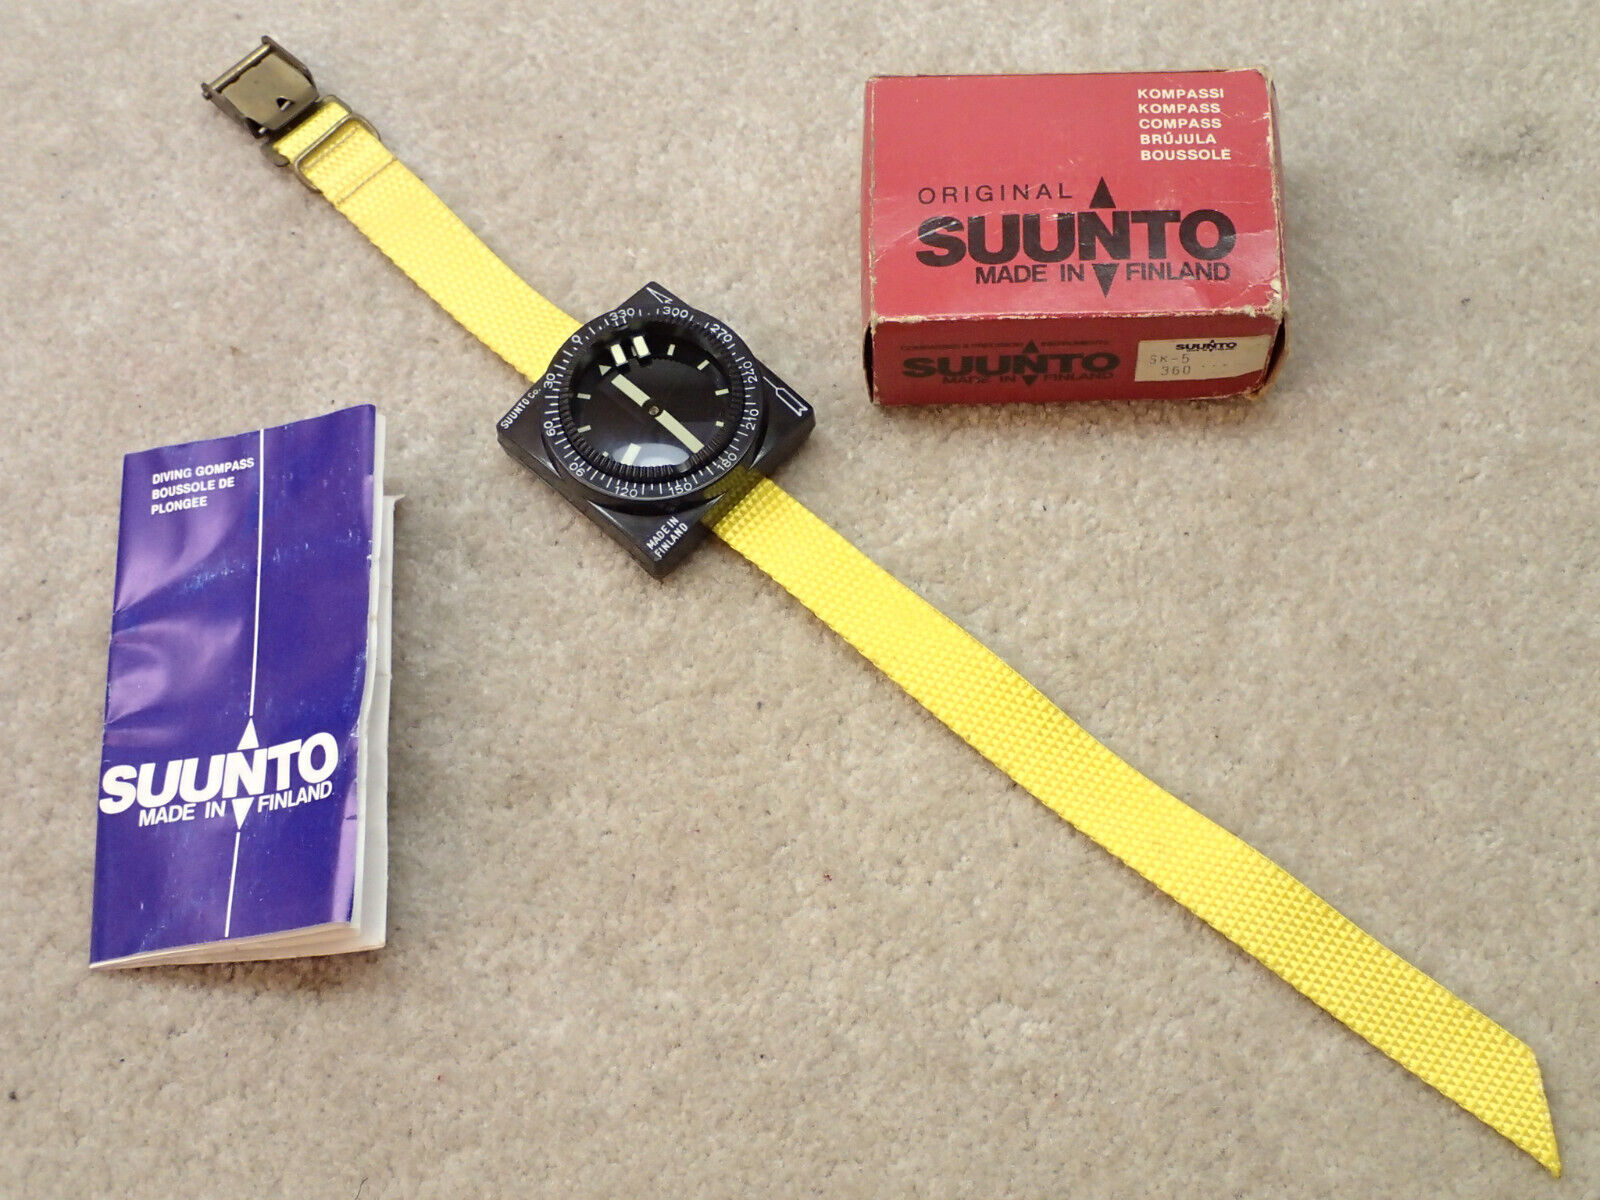 Suunto Vintage Scuba Dive Diving Wrist Compass Made in Finland Nice